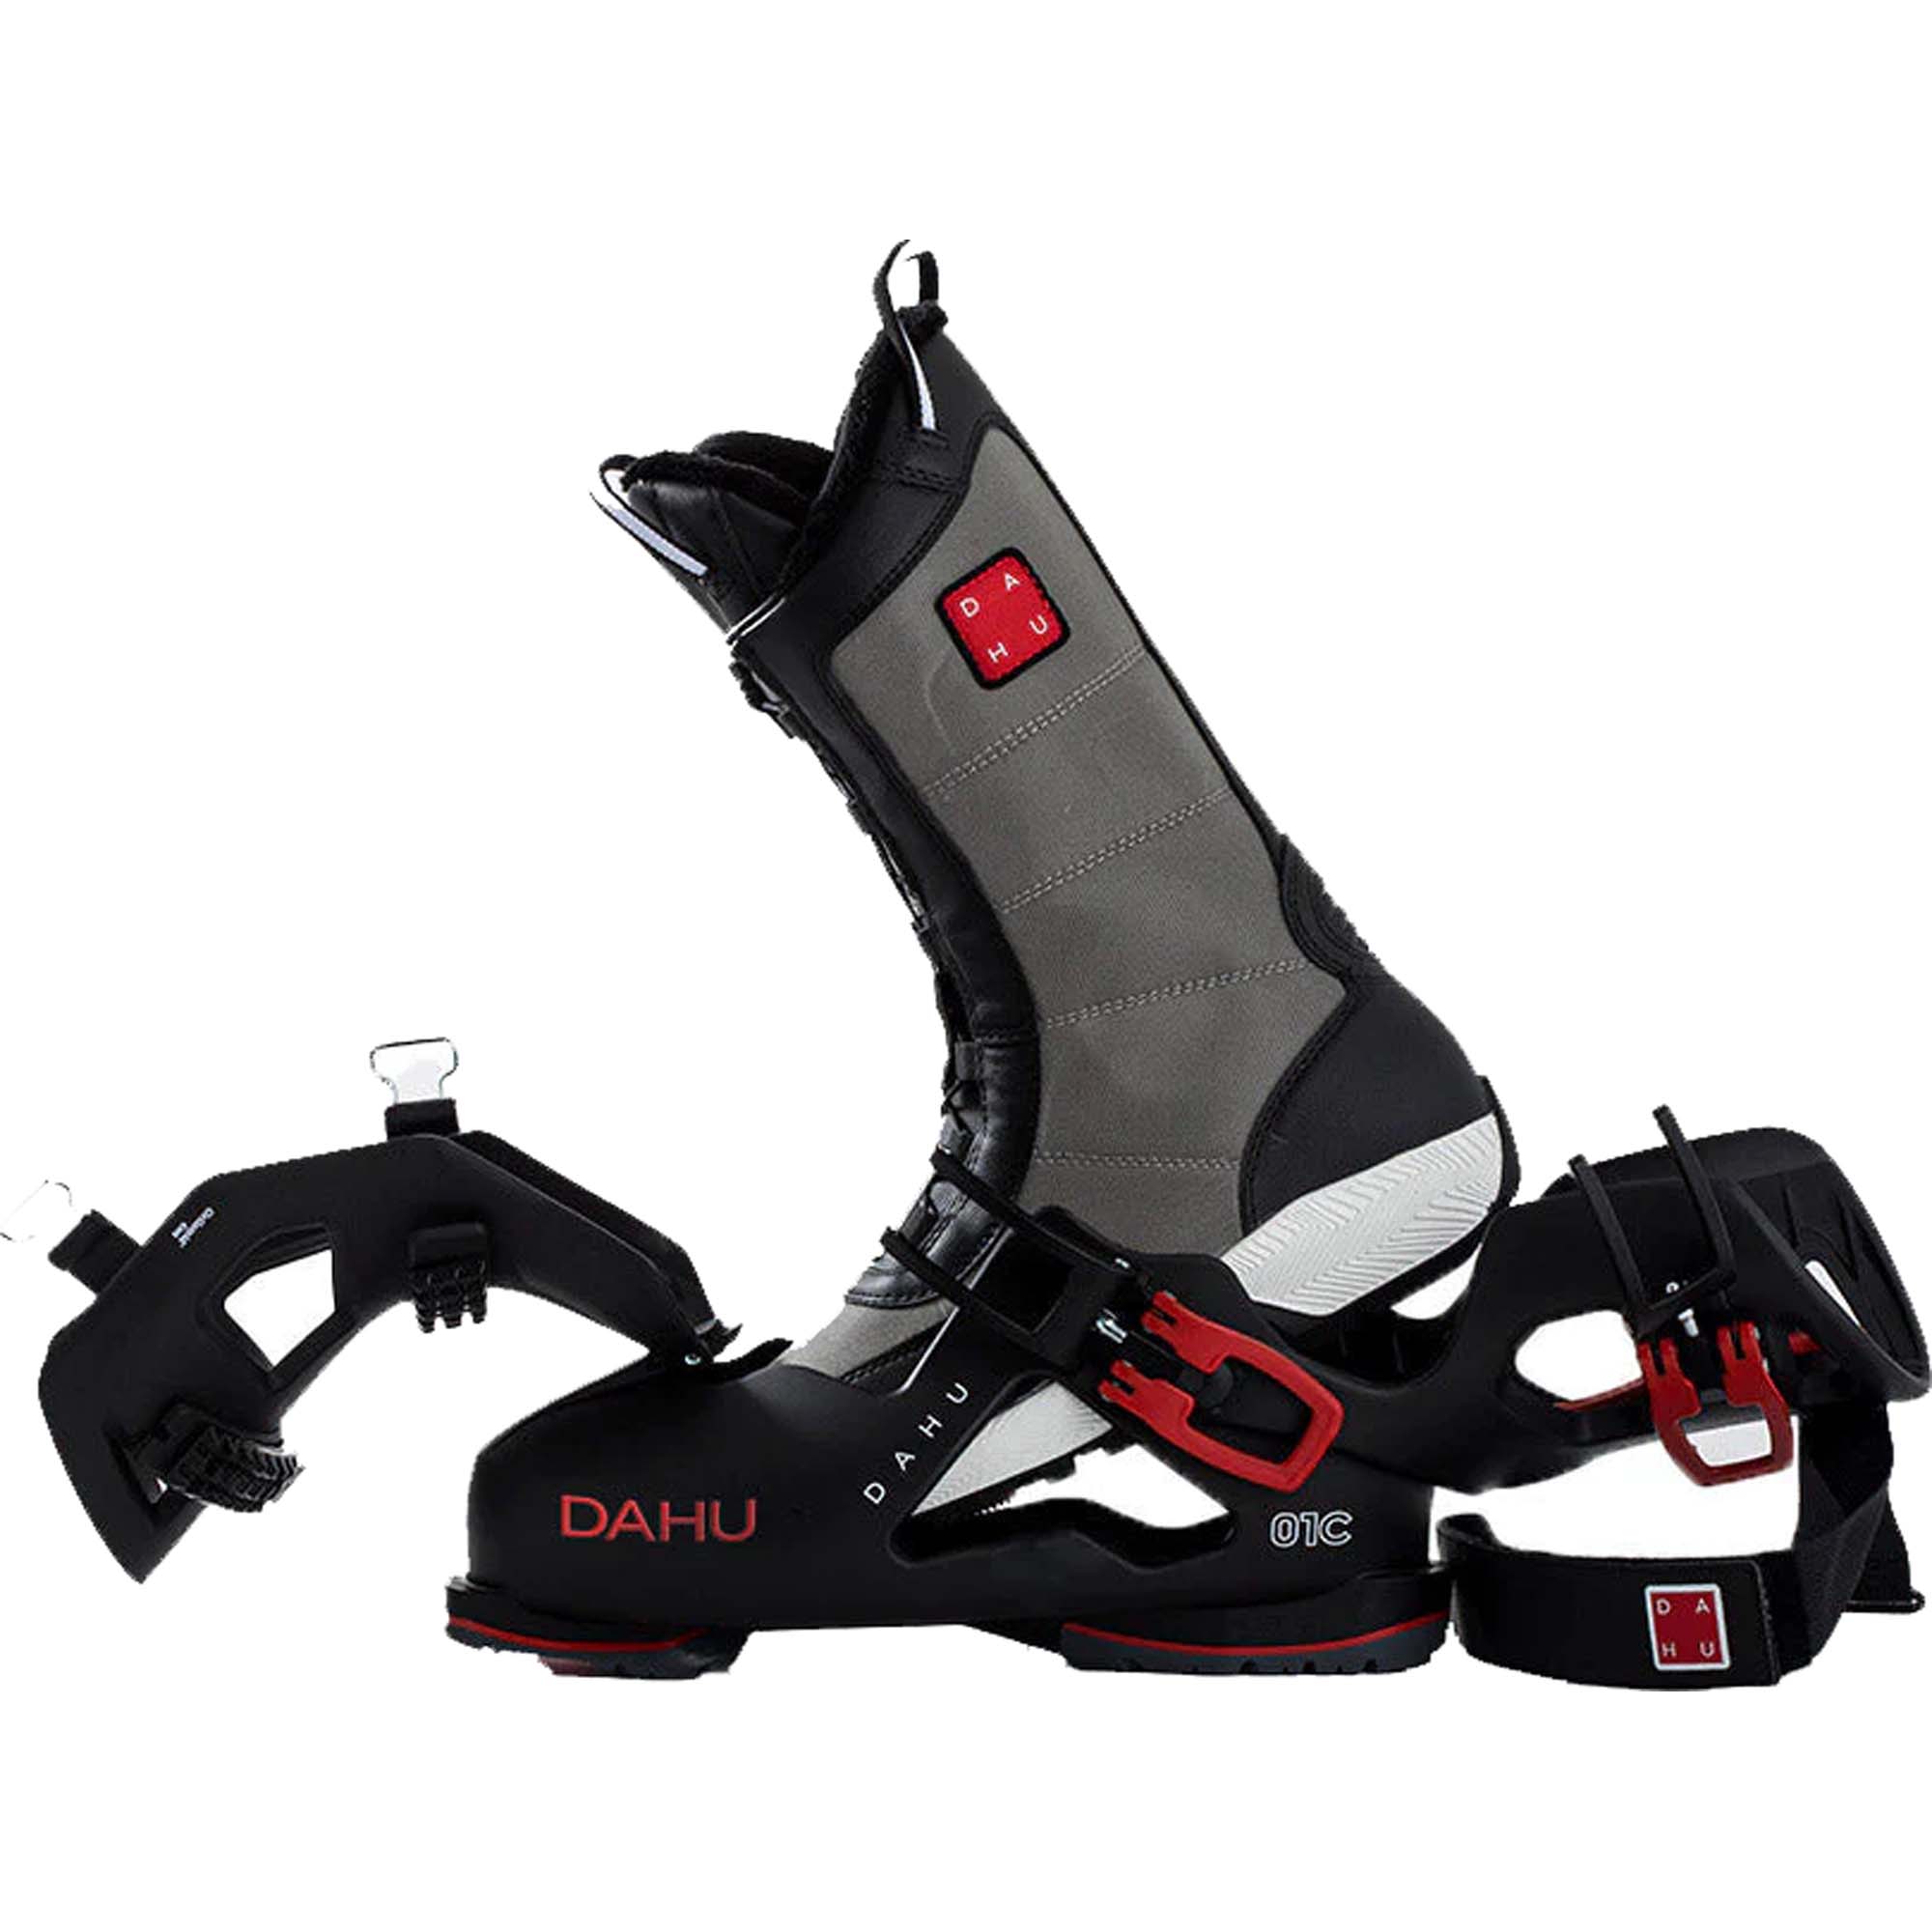 DAHU Ecorce 01C Ski Boots